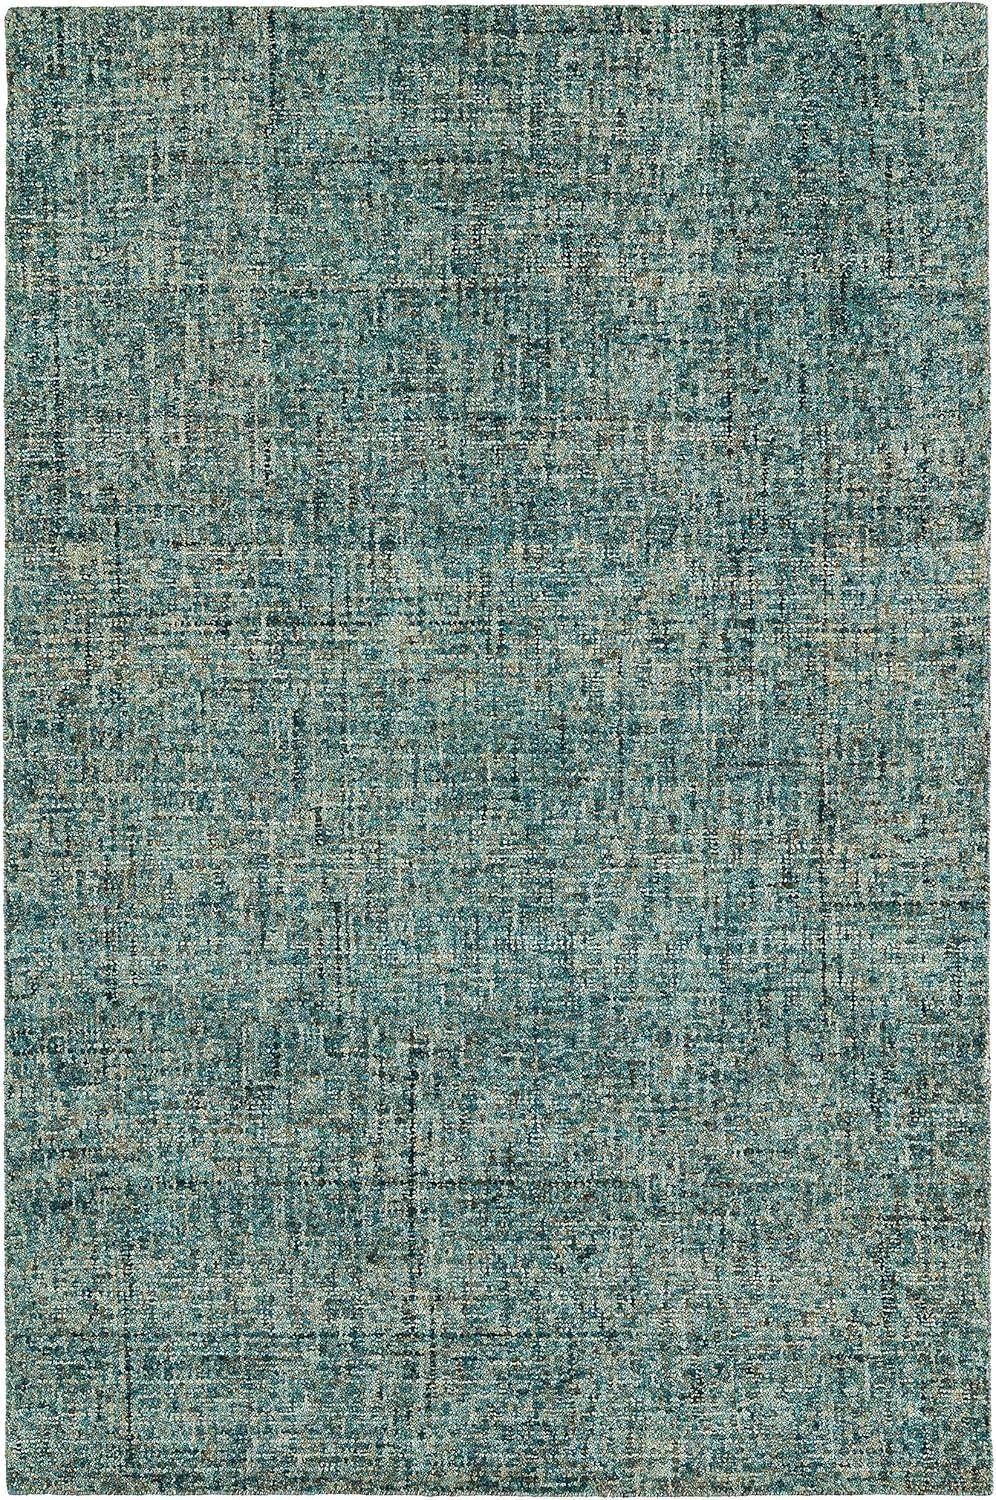 Handmade Turquoise & Teal Wool Rectangular Rug 3'6" x 5'6"